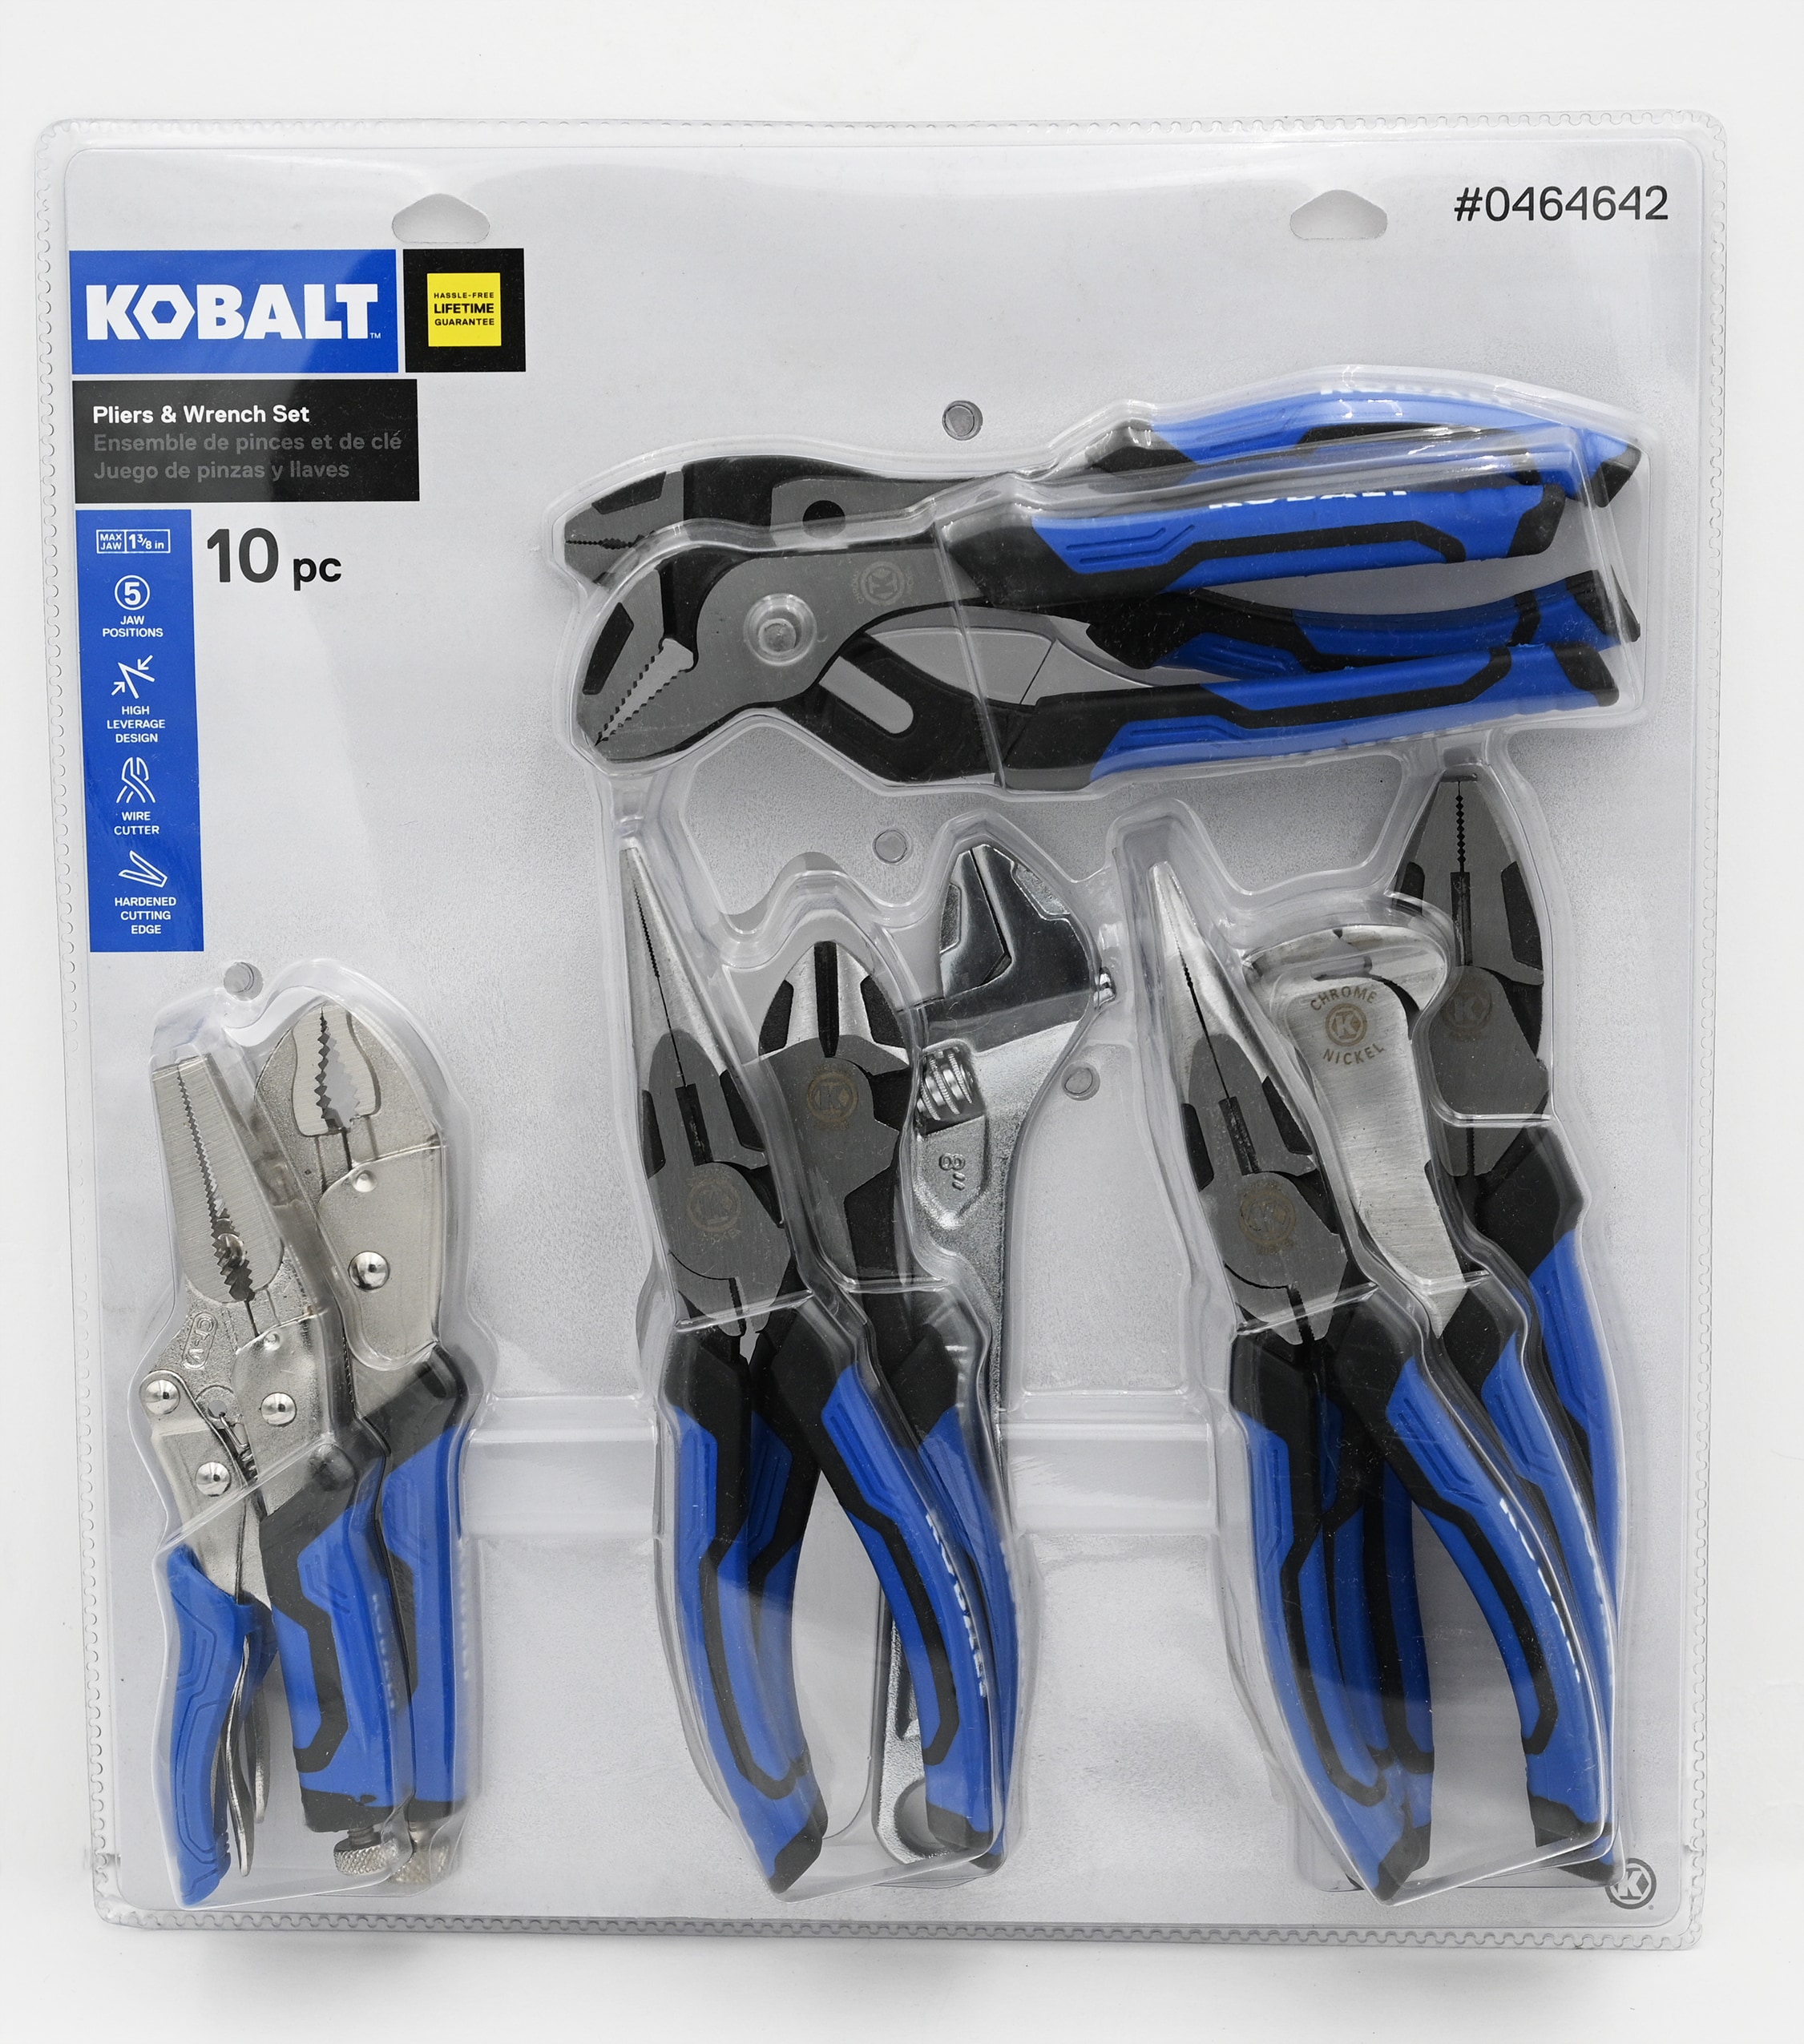 Kobalt Assorted Pliers at